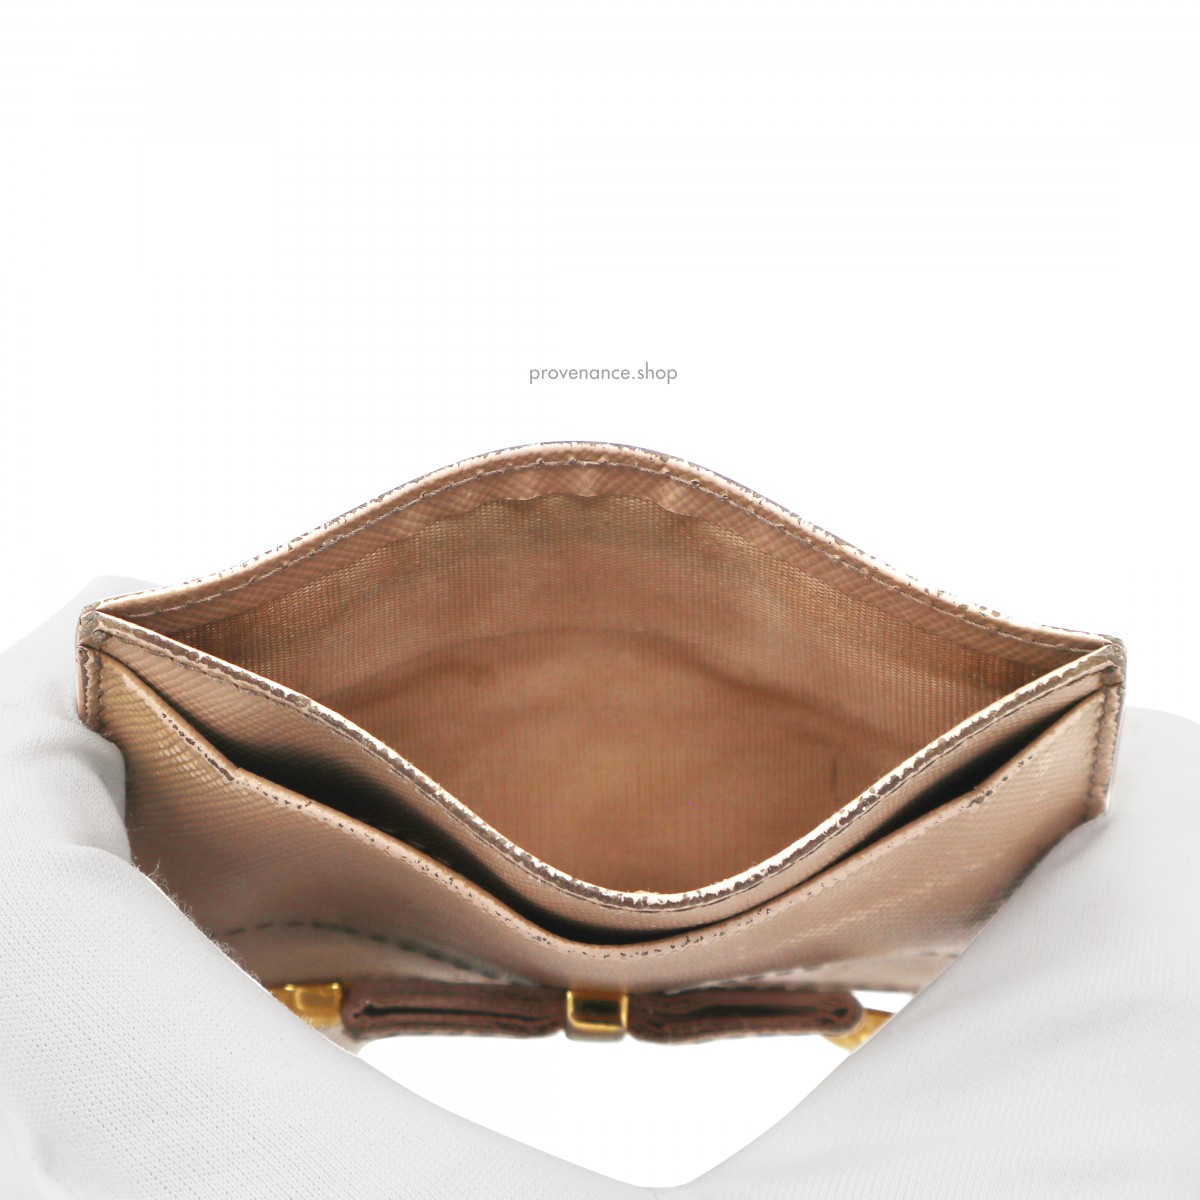 Prada Cardholder Wallet - Peach Saffiano Leather - 5